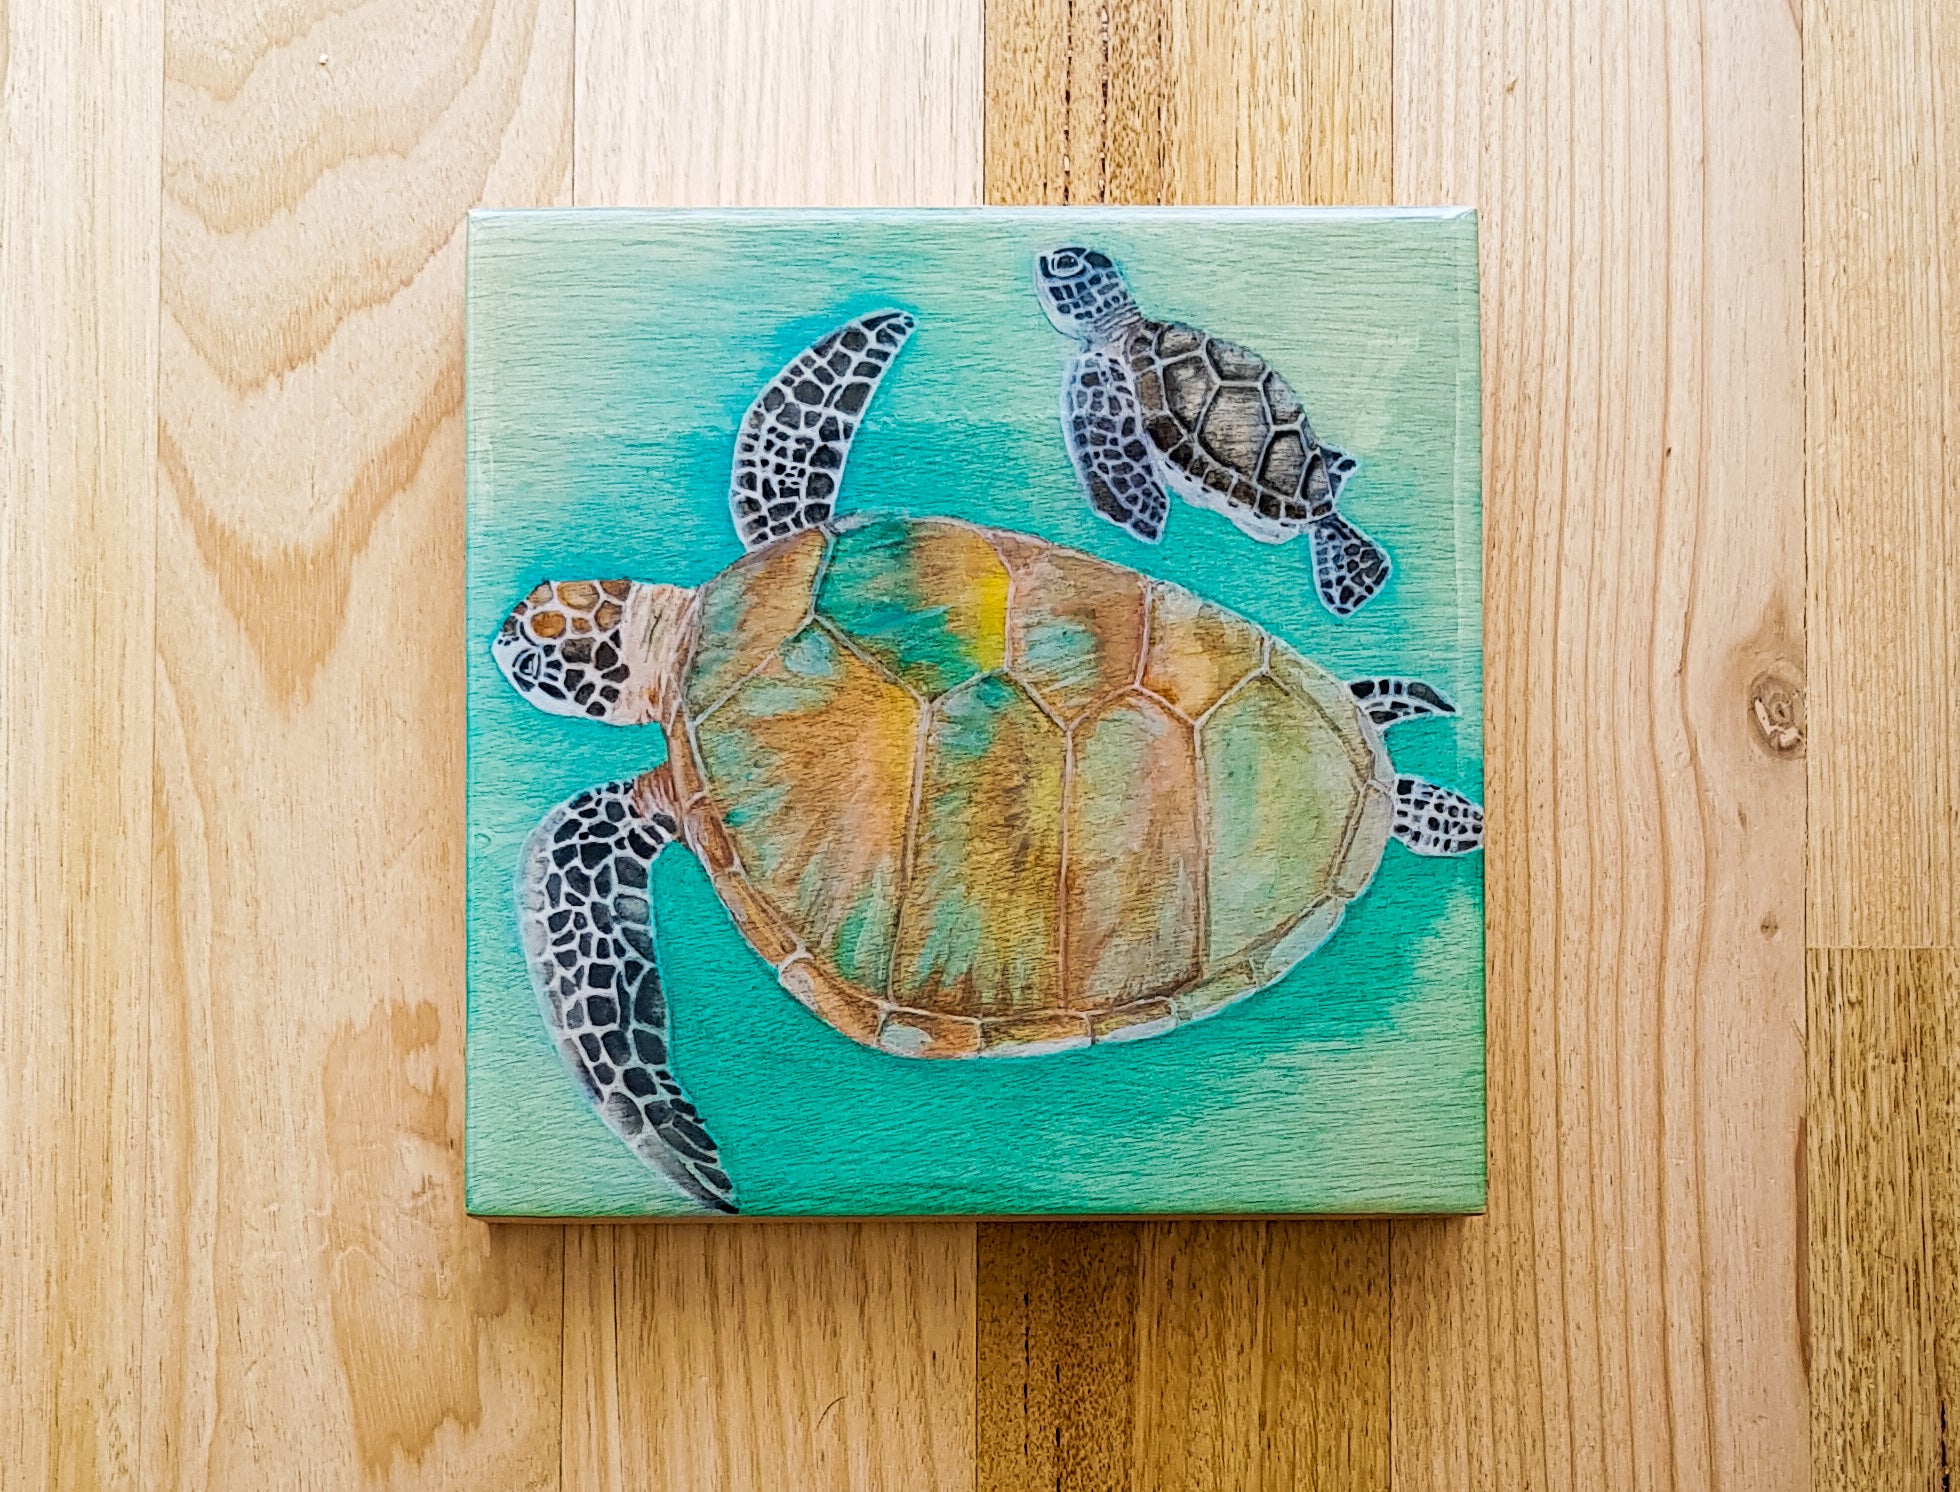 Sea Turtles – Journey Under the Sea